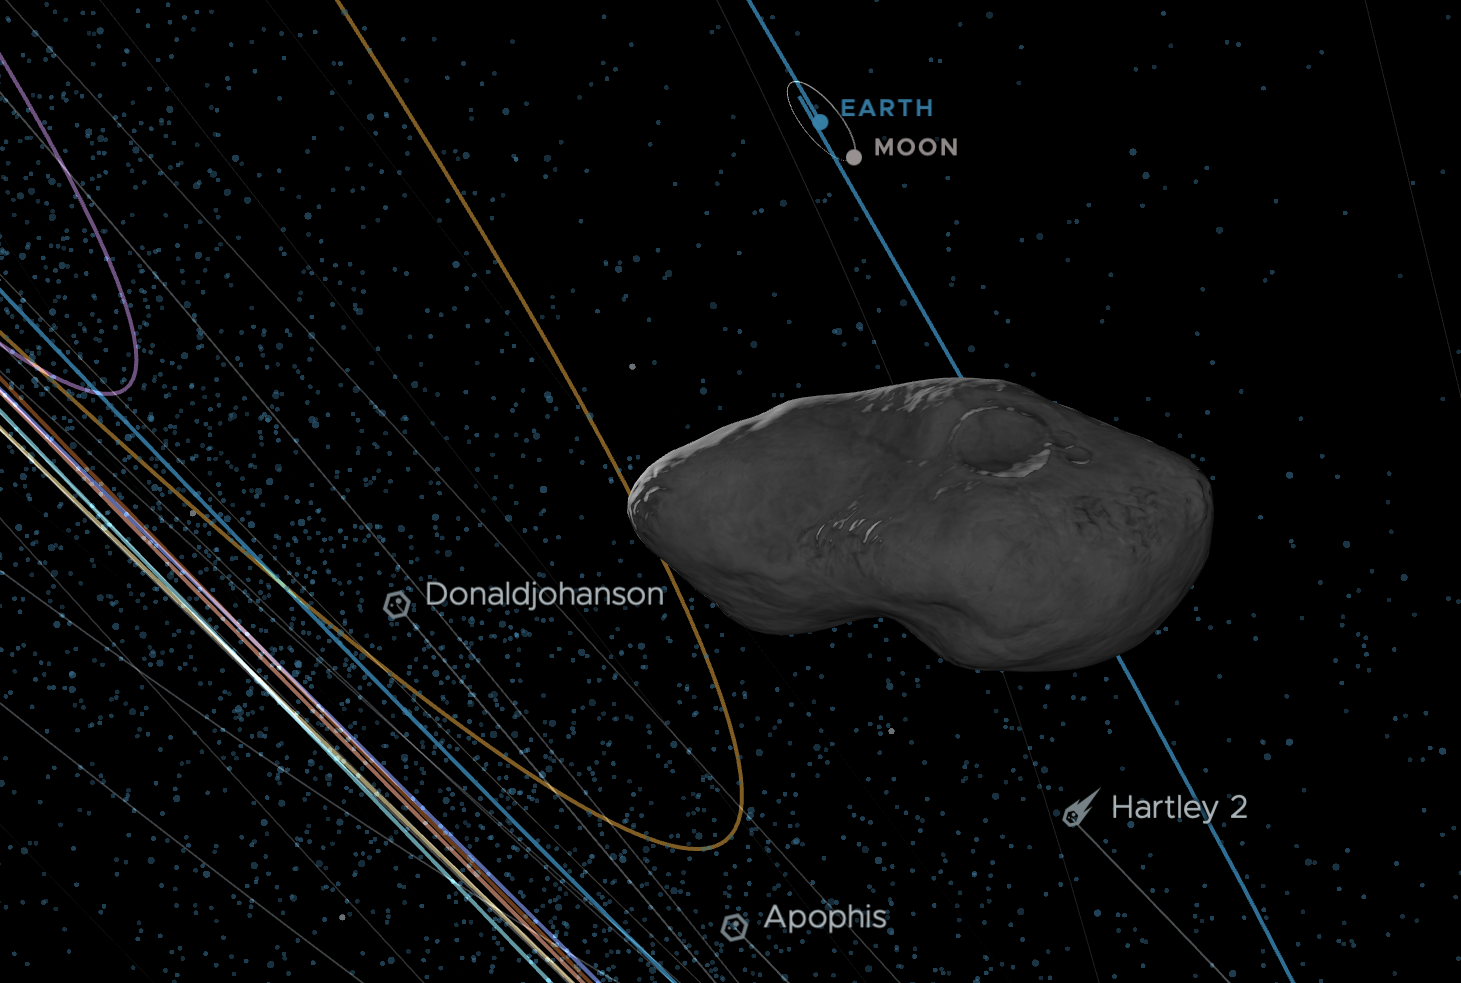 Астероид 2023 DW